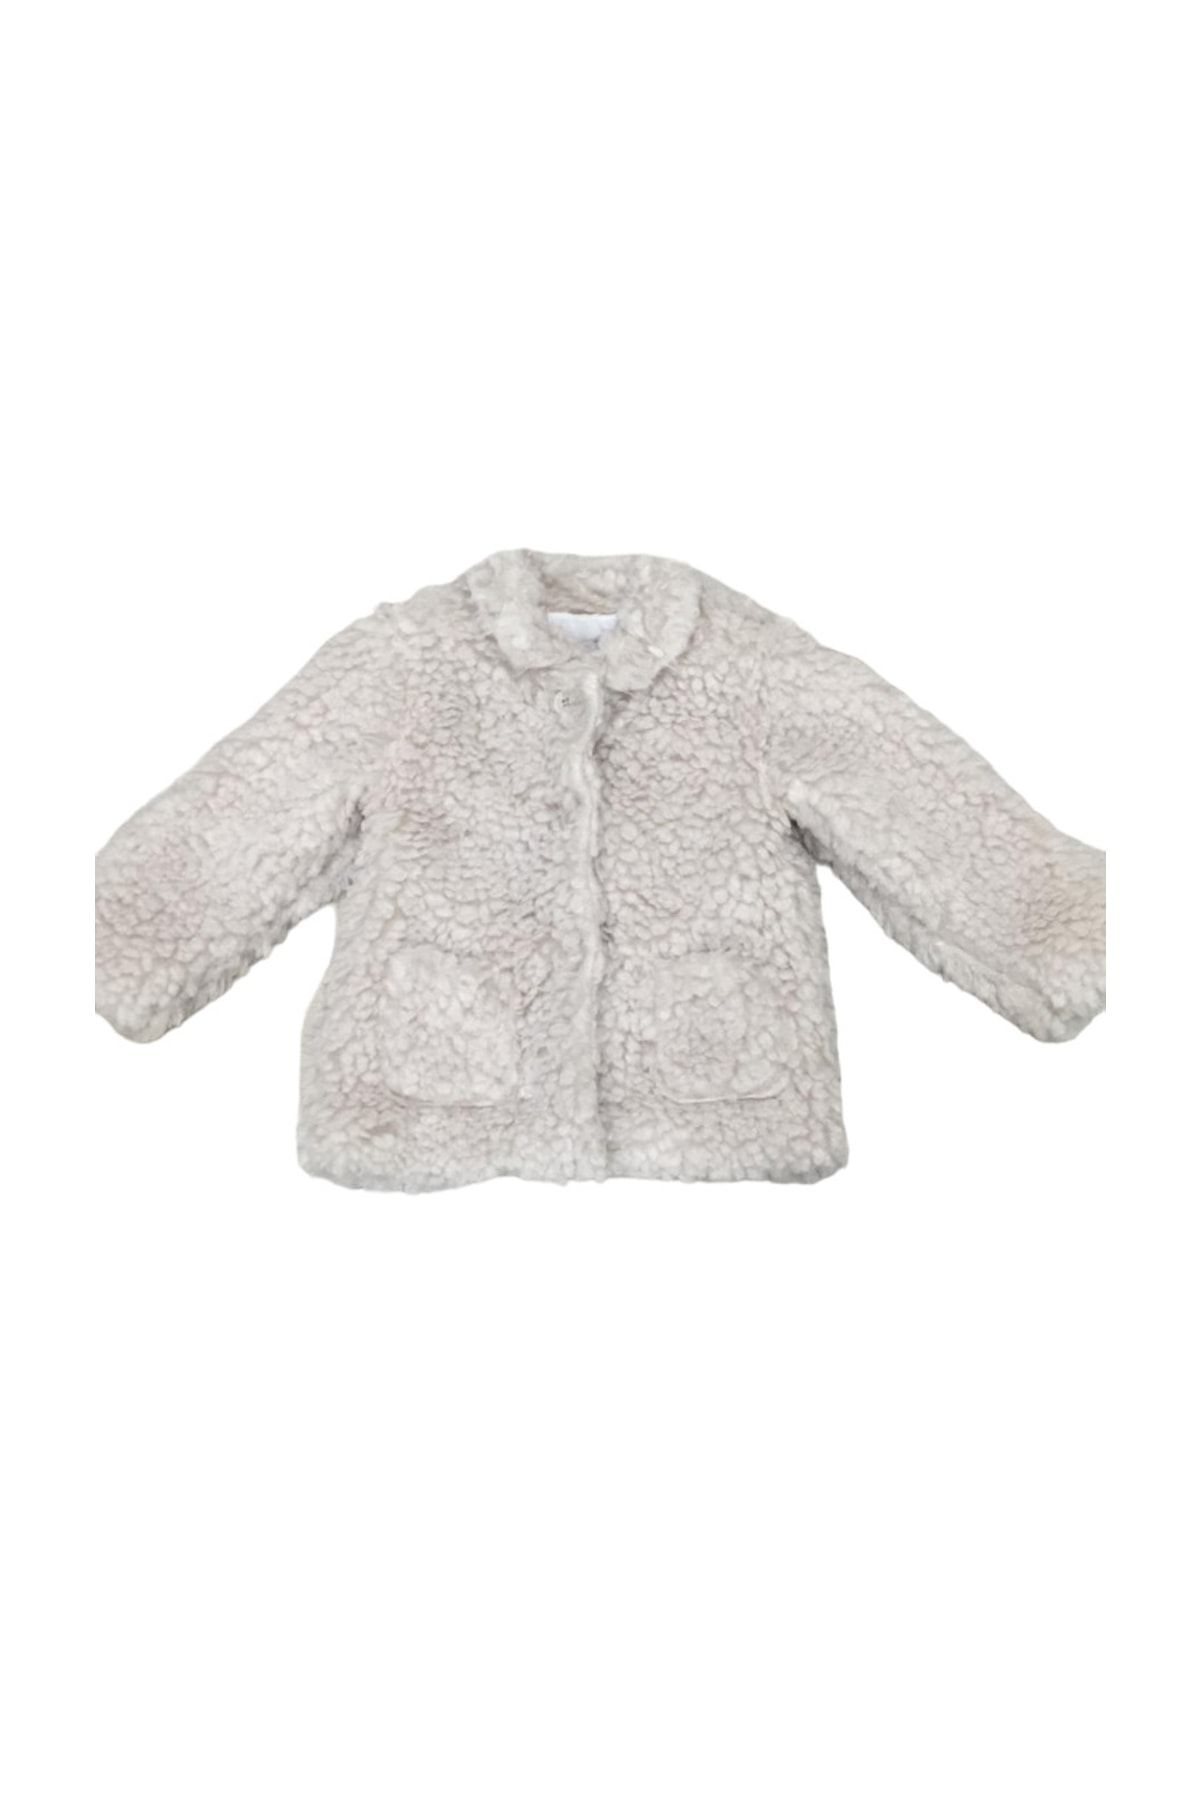 Monna Rosa Kız Bebek Peluş Ceket, Bej Peluş Ceket, 21647